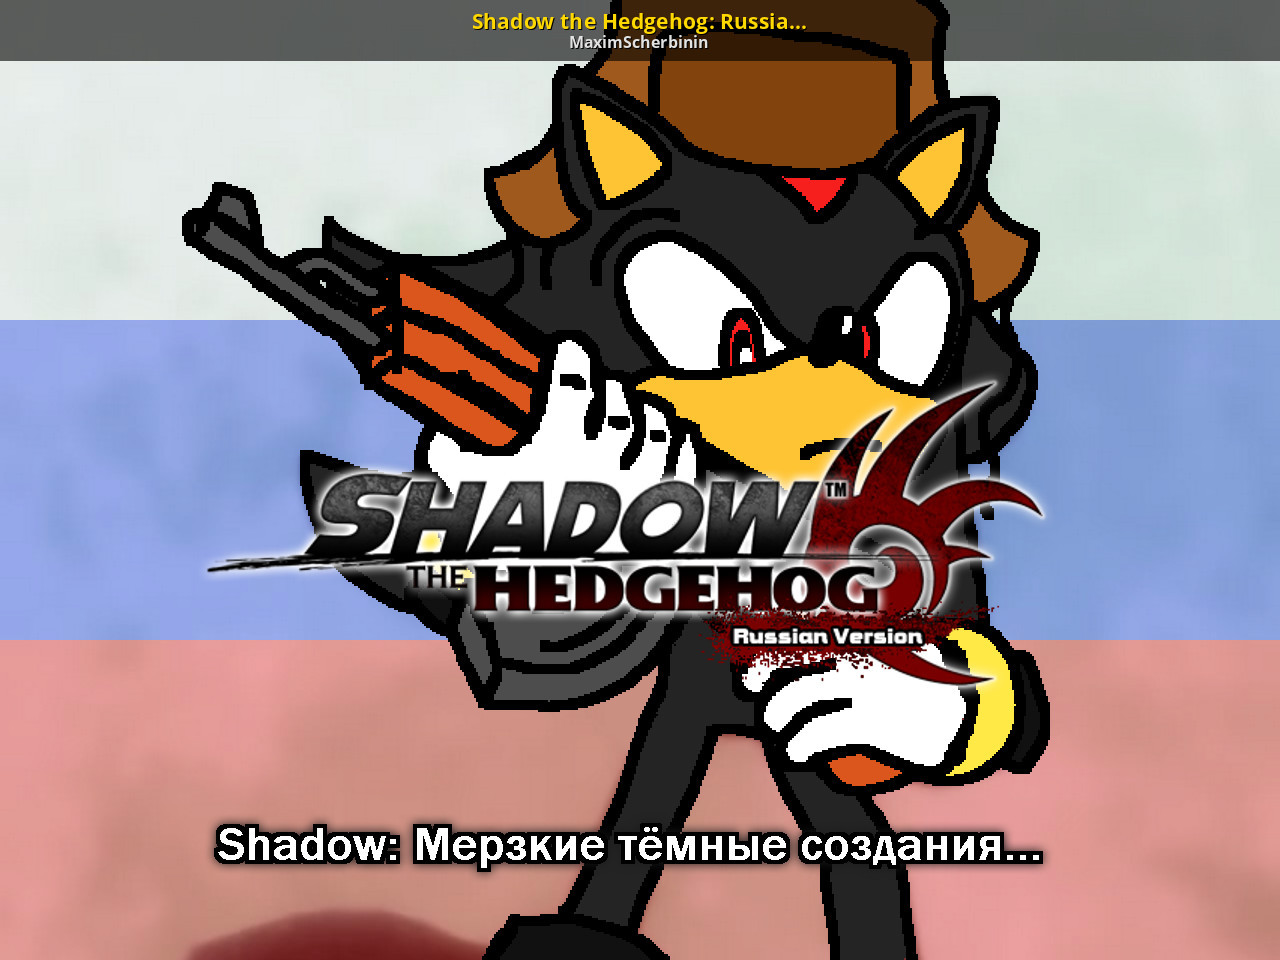 Shadow the Hedgehog: Russian Version (GC Port) [Shadow The